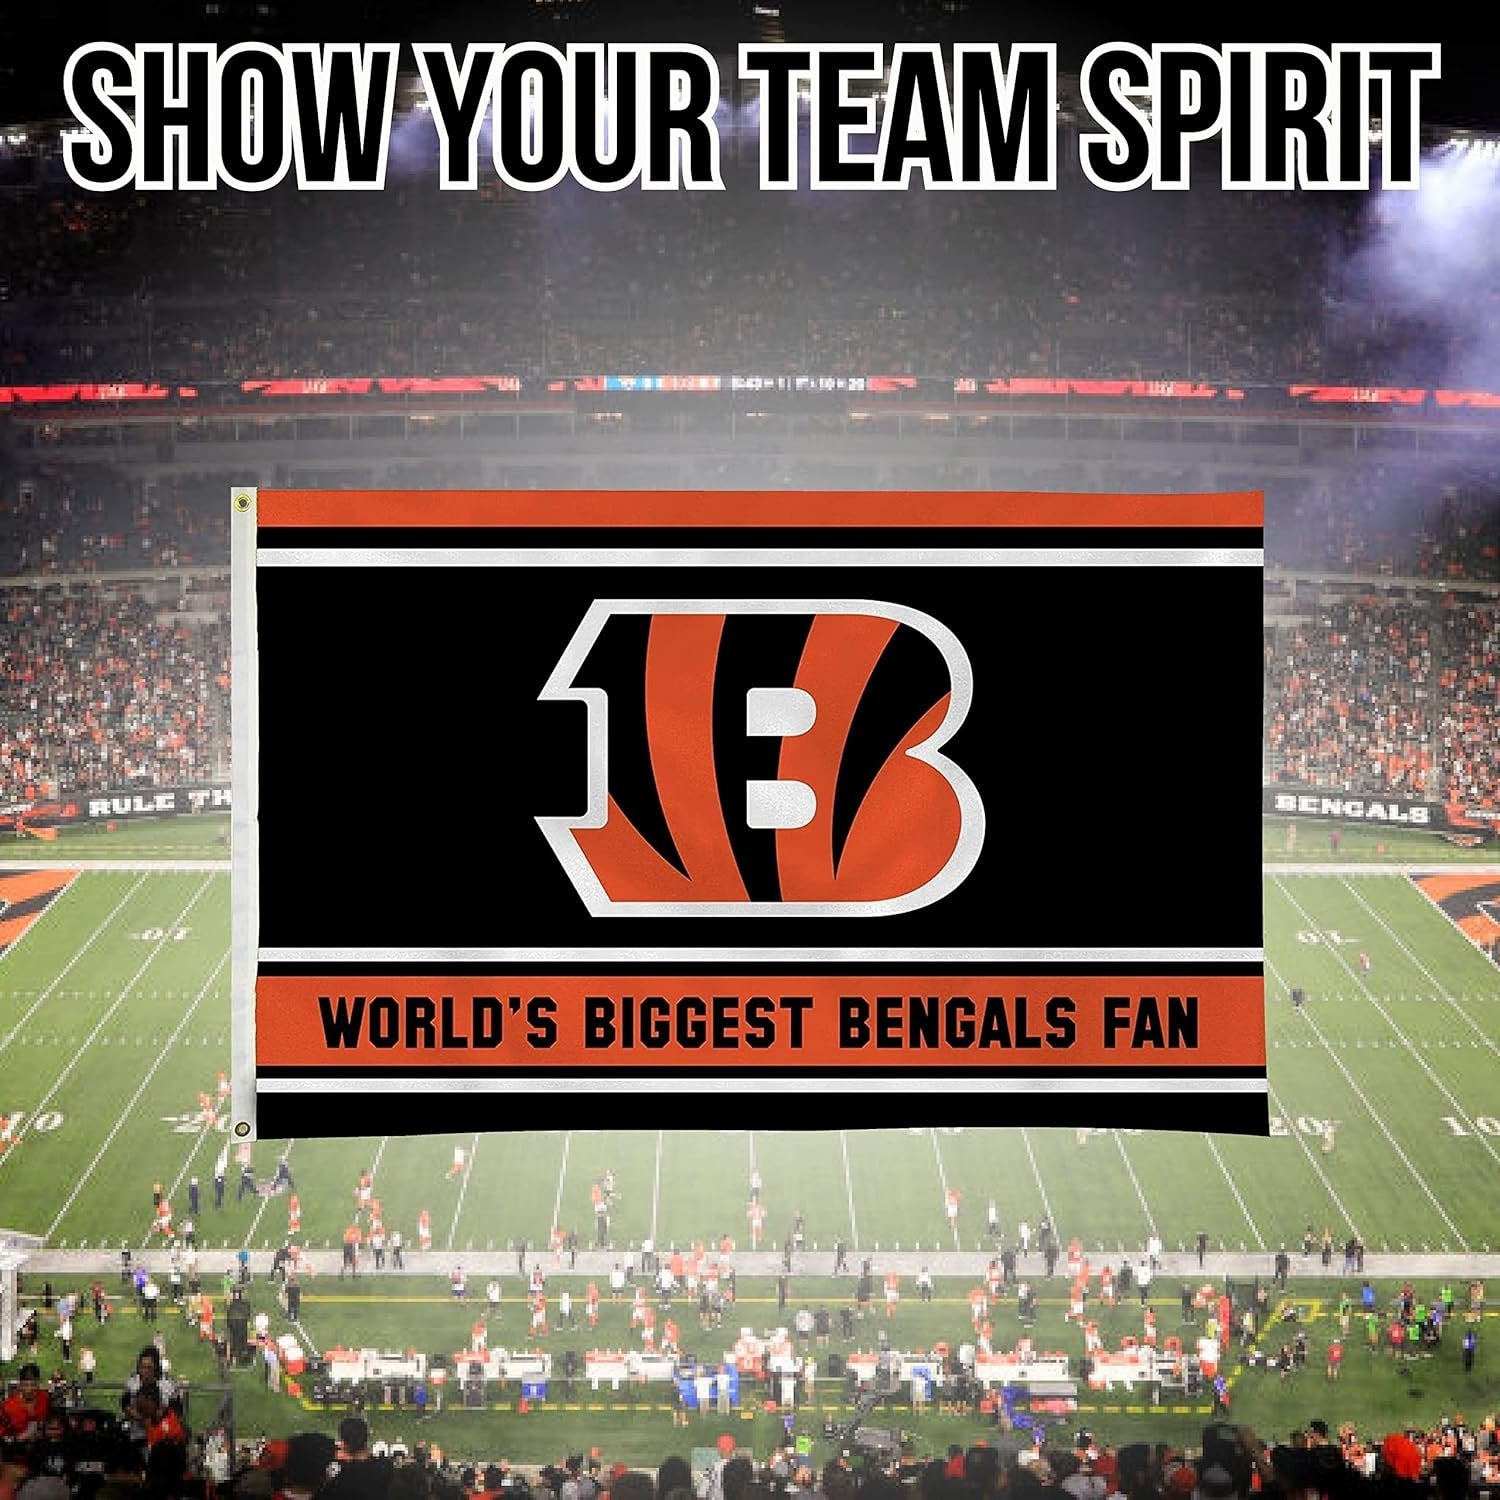 Cincinnati Bengals 3x5 Feet Flag Banner, World's Biggest Fan, Metal Grommets, Single Sided, Indoor or Outdoor Use